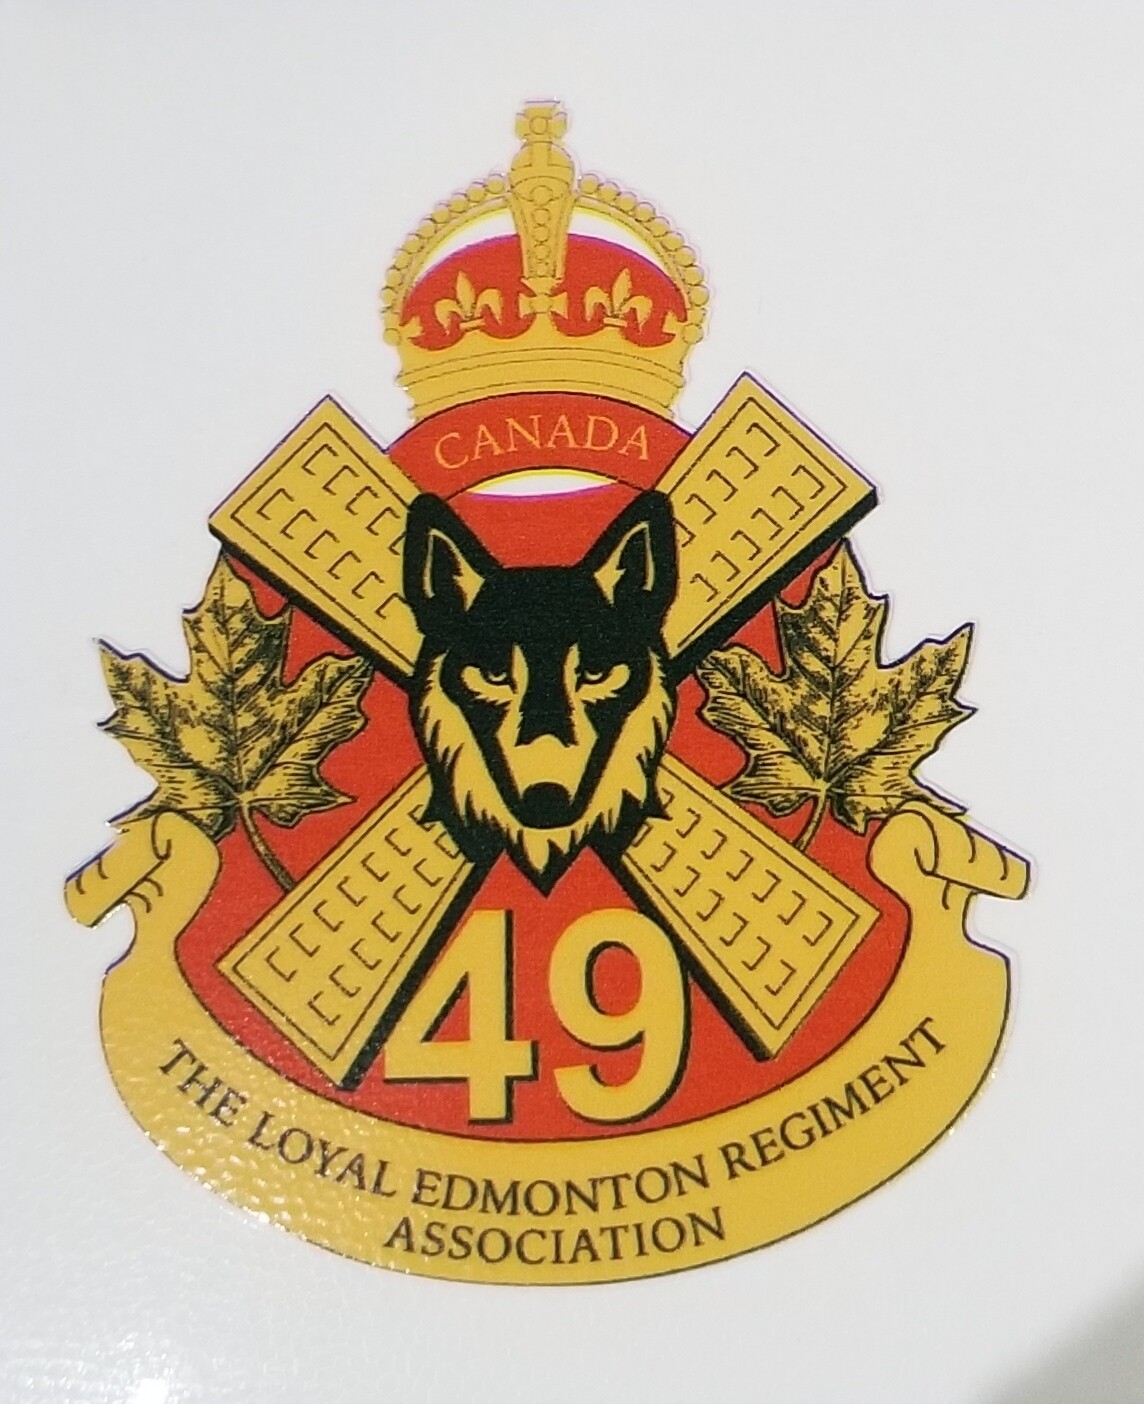 Decal - The Loyal Edmonton Regiment Association